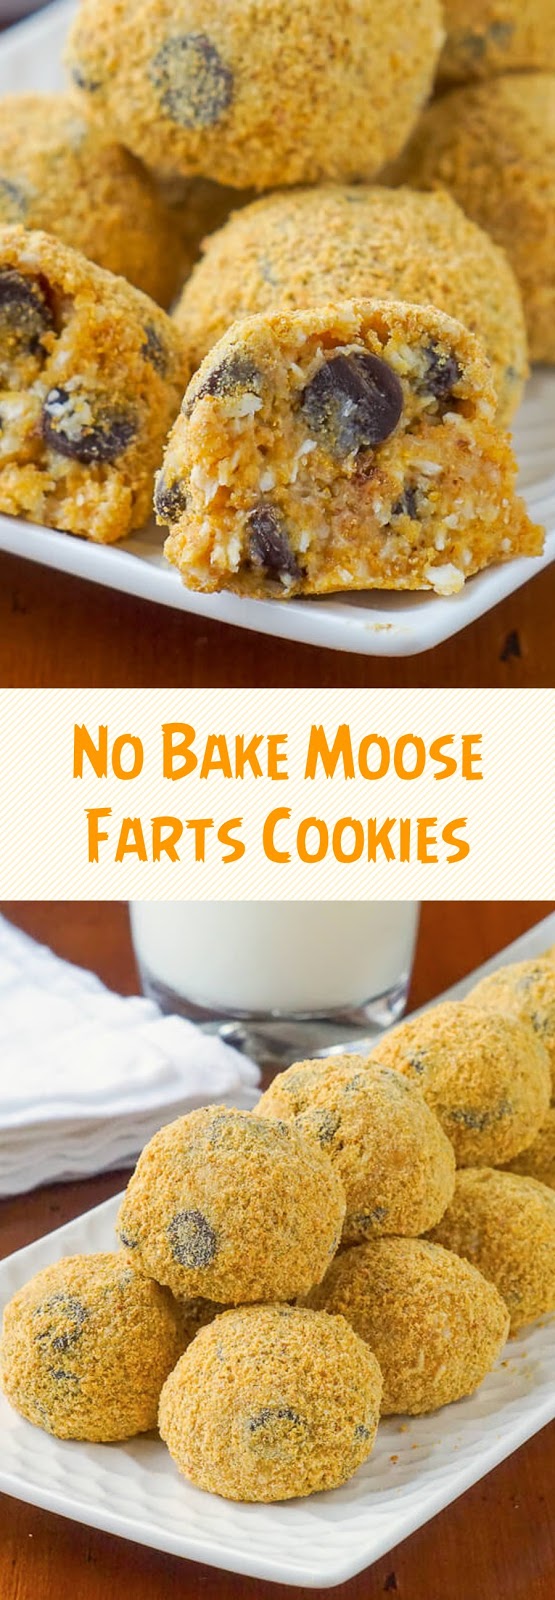 No Bake Moose Farts Cookies